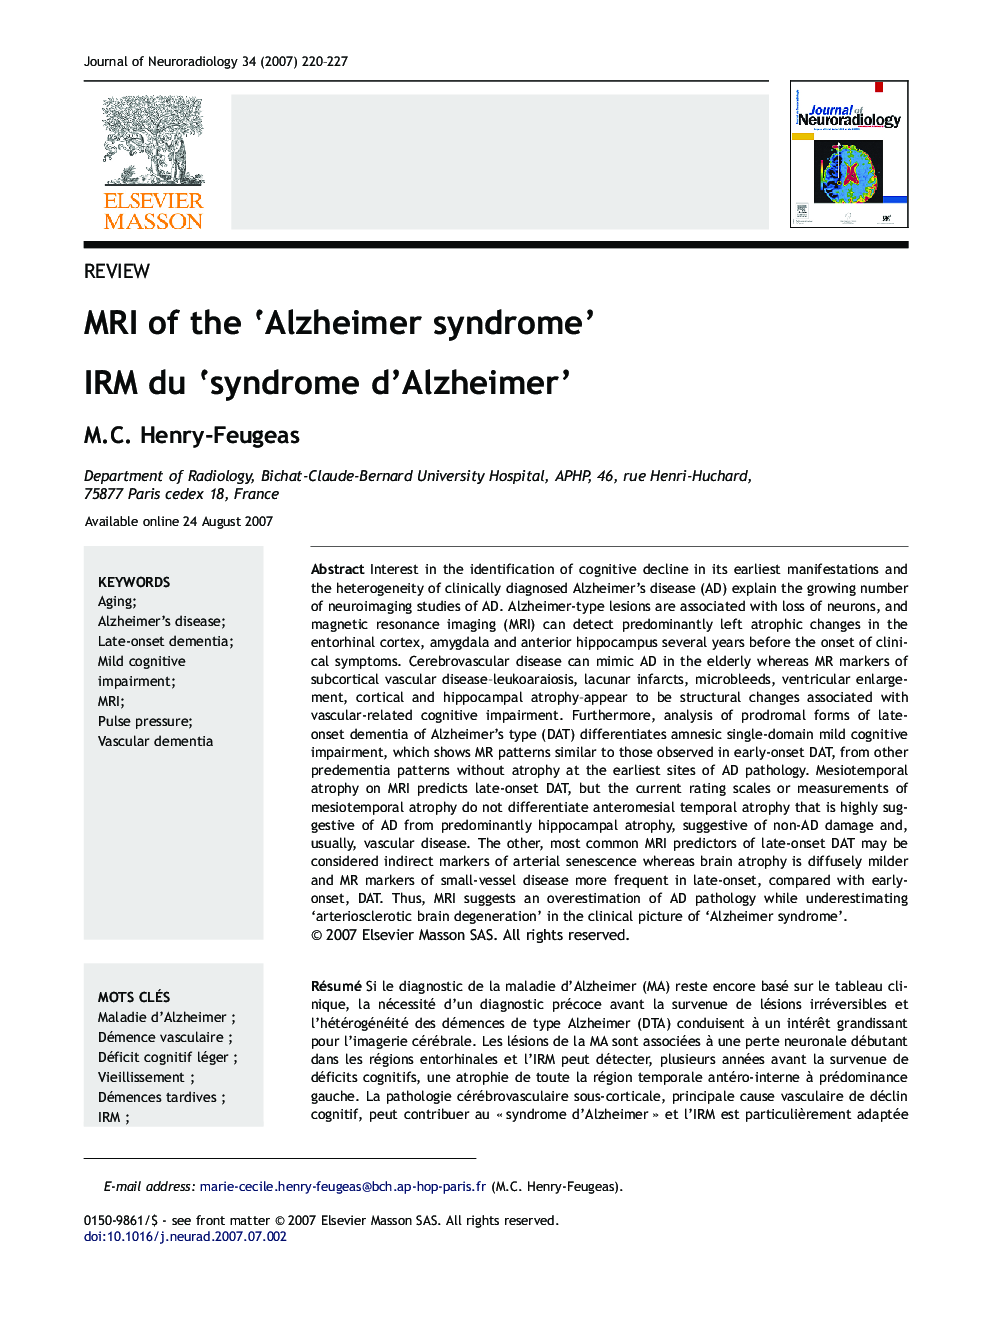 MRI of the ‘Alzheimer syndrome’